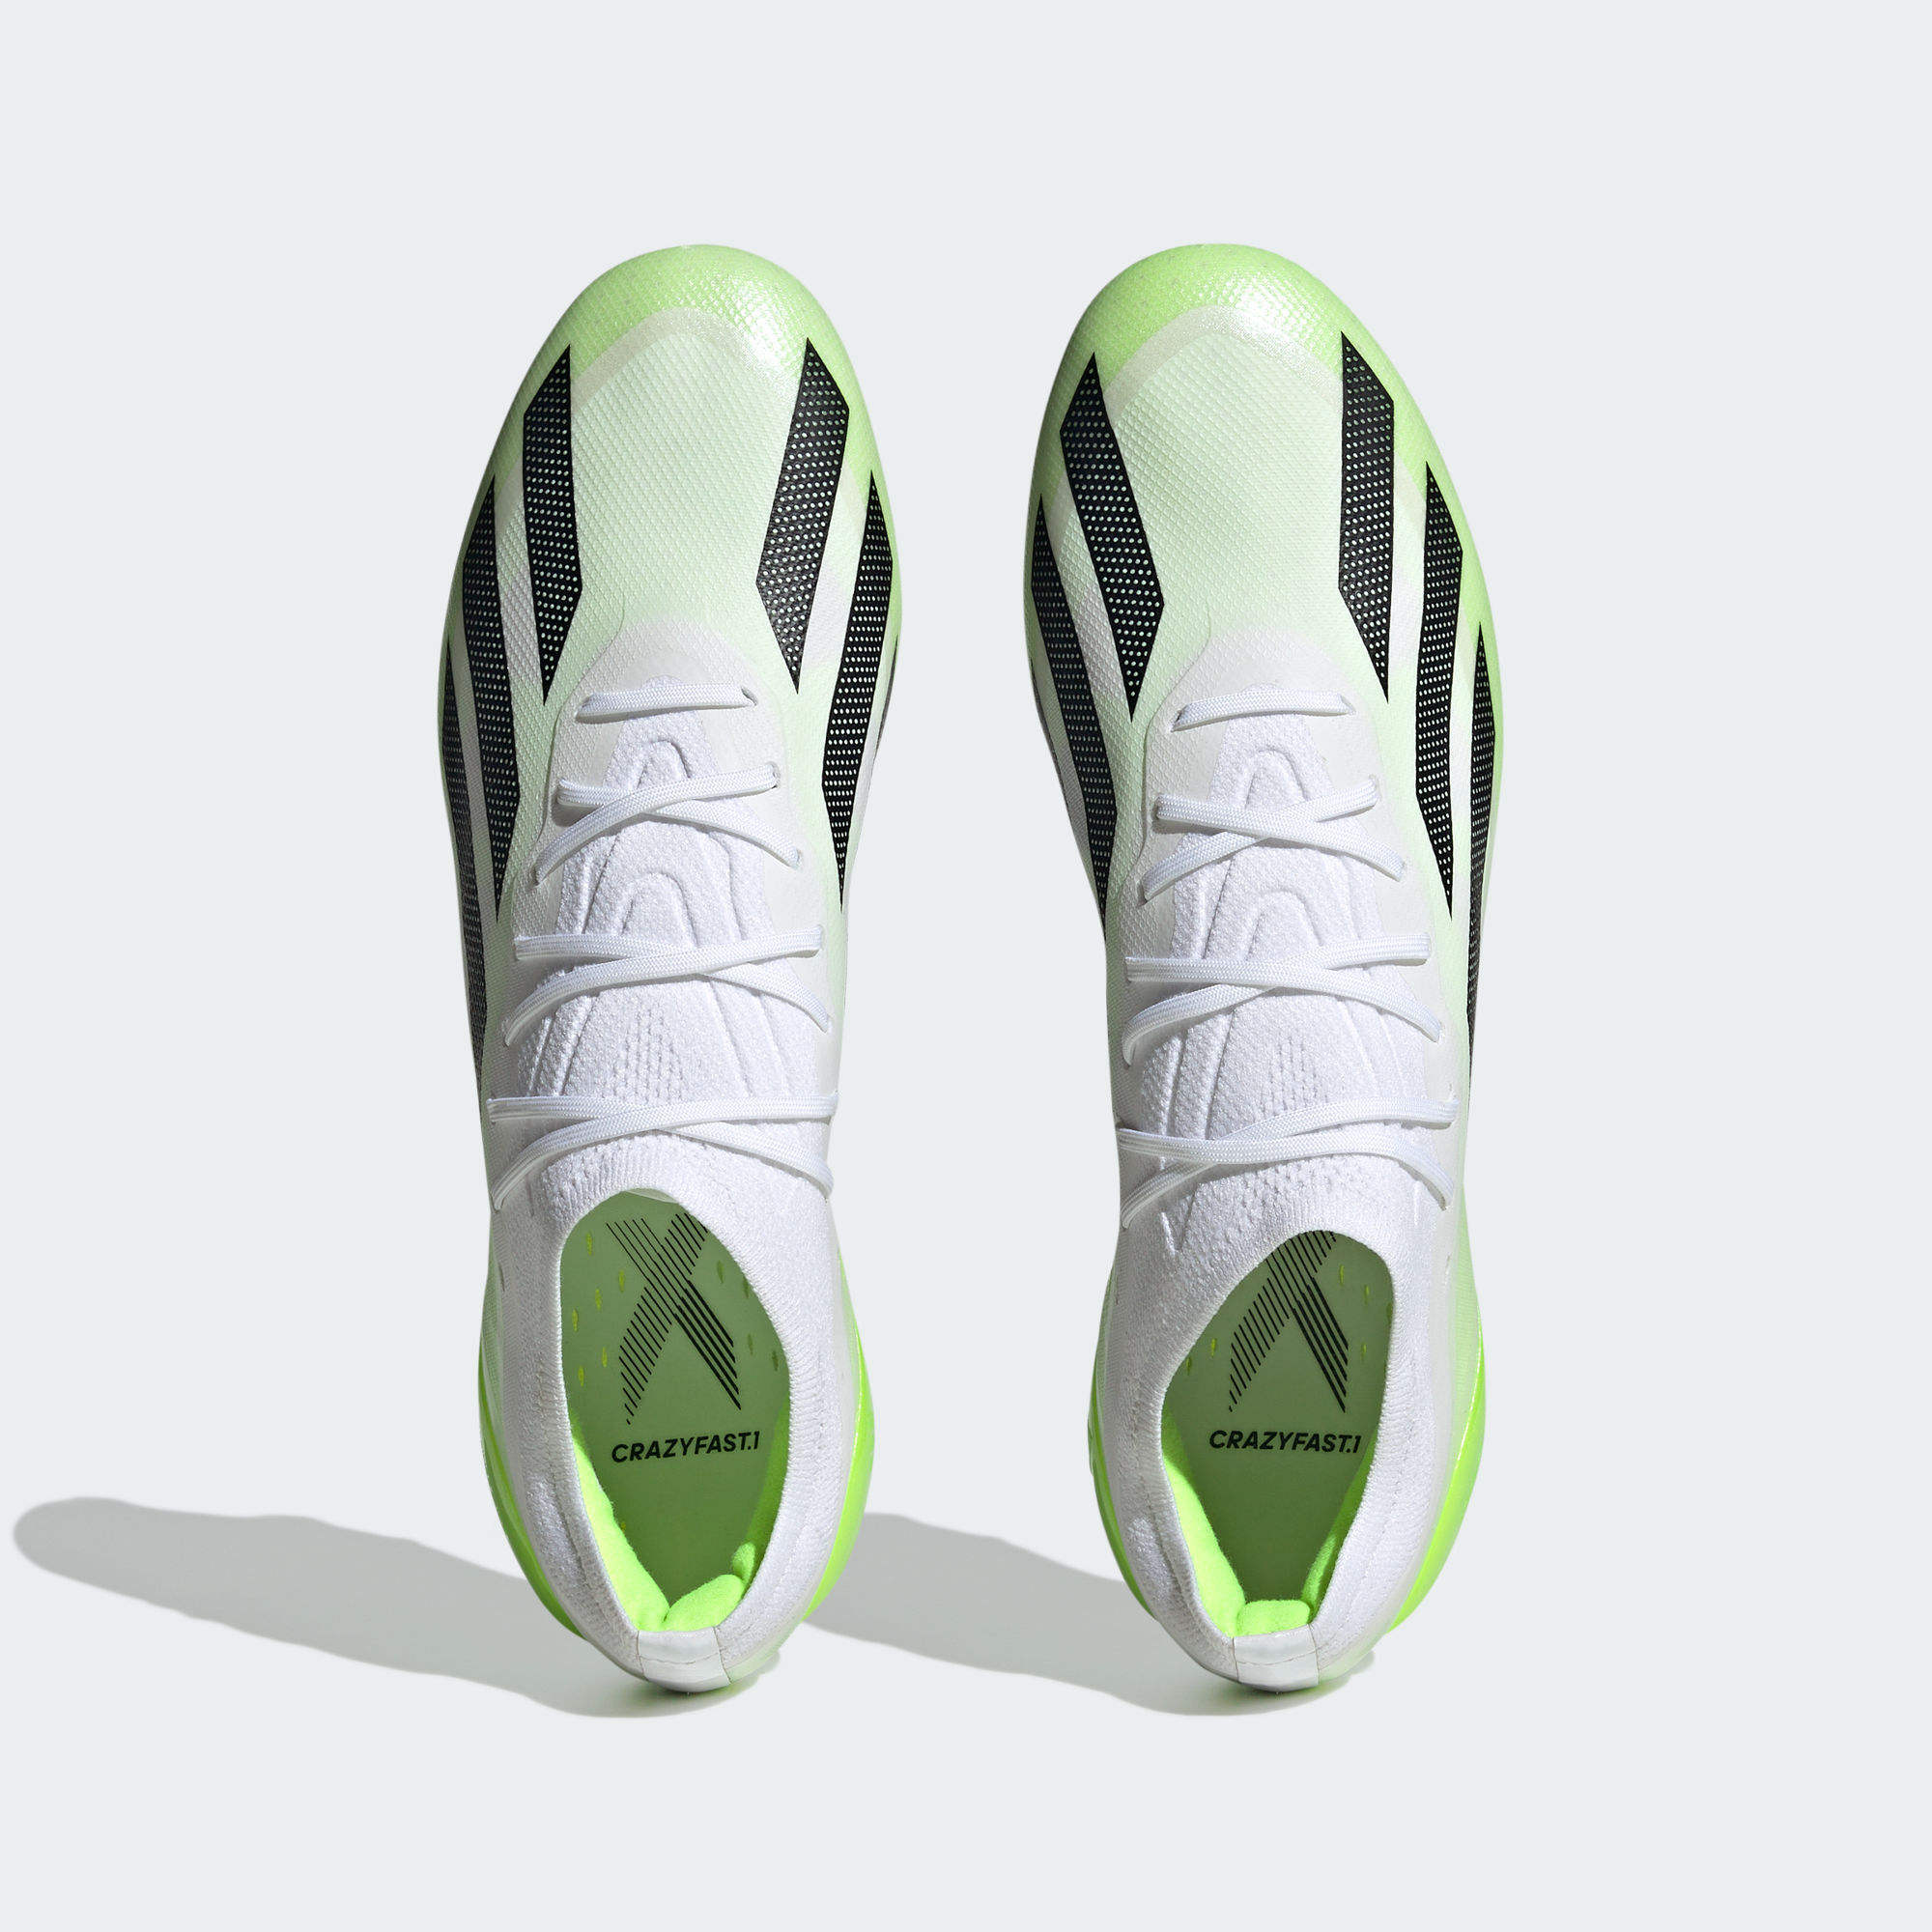 X CRAZYFAST.1 偏硬地場足球球靴- 白色| 女子,男子| adidas(愛迪達